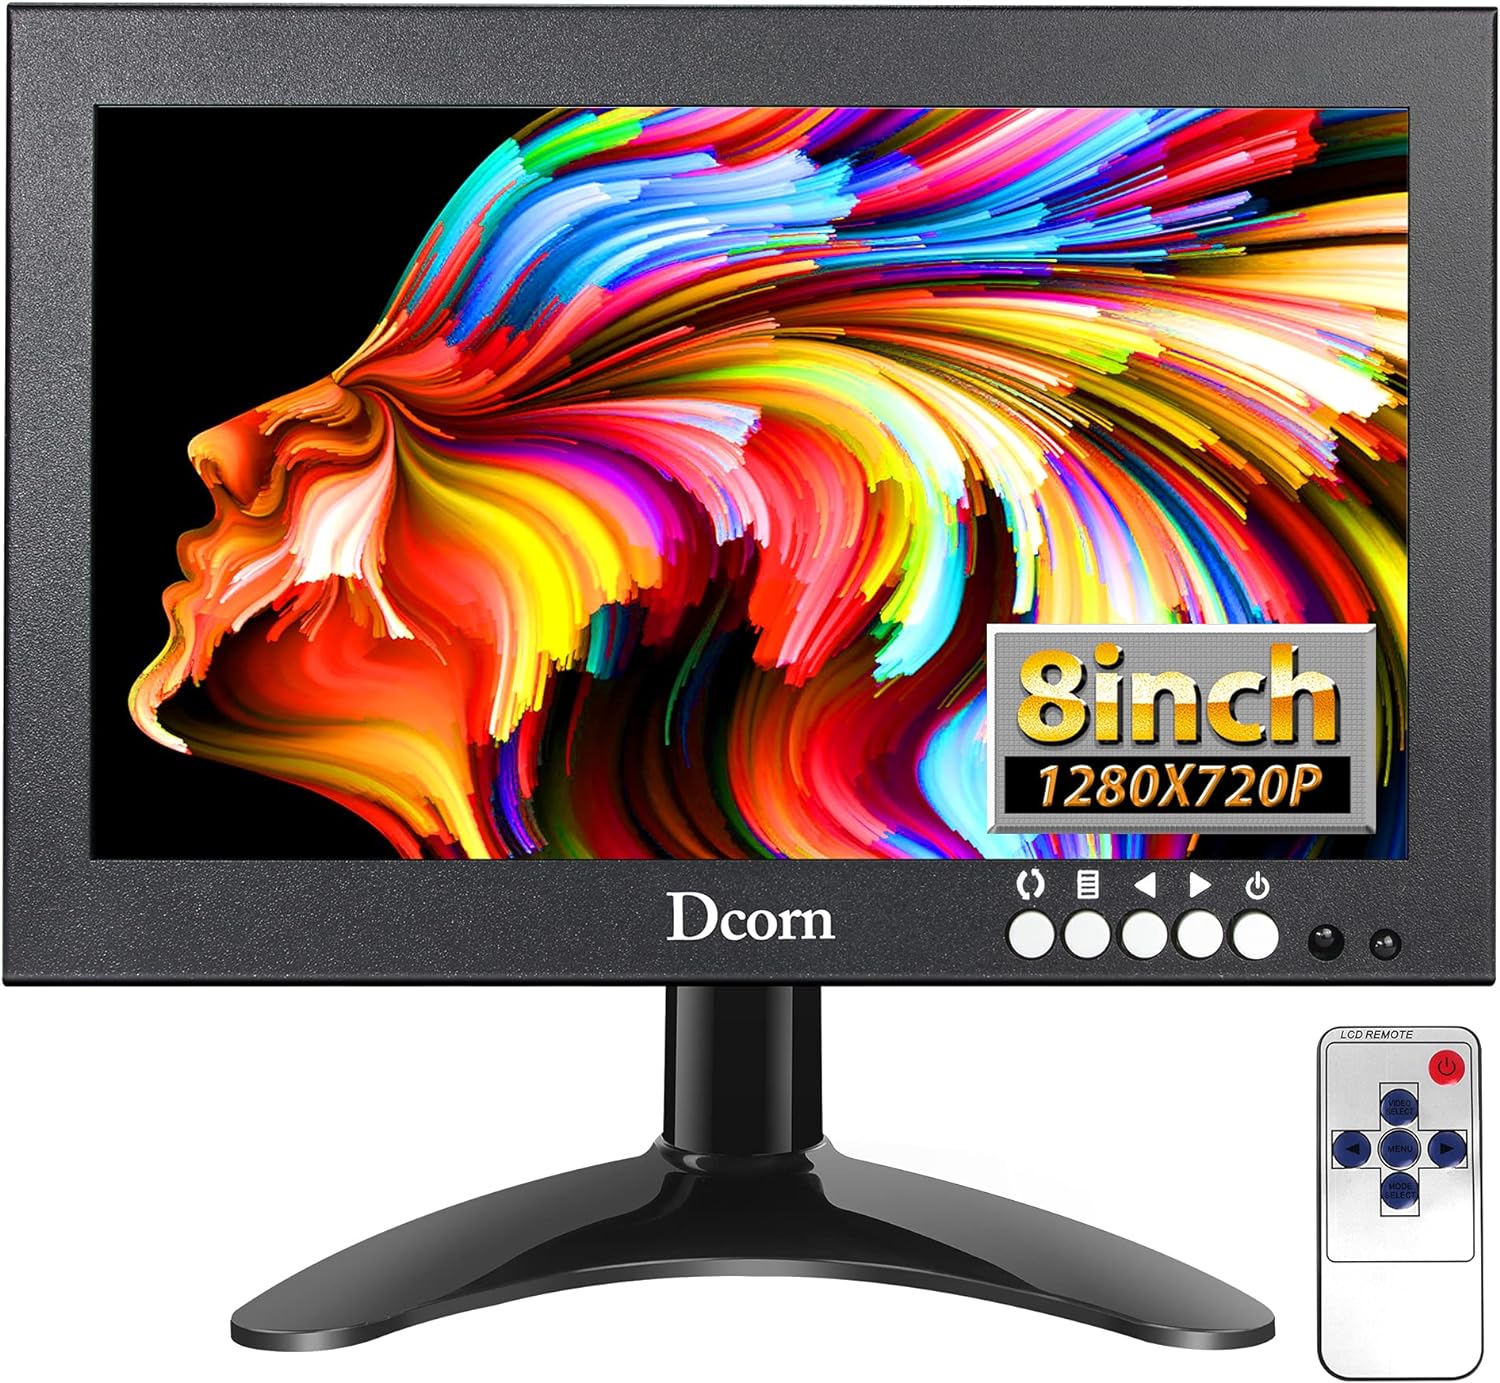 Dcorn 8 inch Mini Monitor, Small HDMI Monitor 1280x720 16:9 IPS Metal Housing Screen Support HDMI/VGA/AV/BNC Input with Wall Bracket